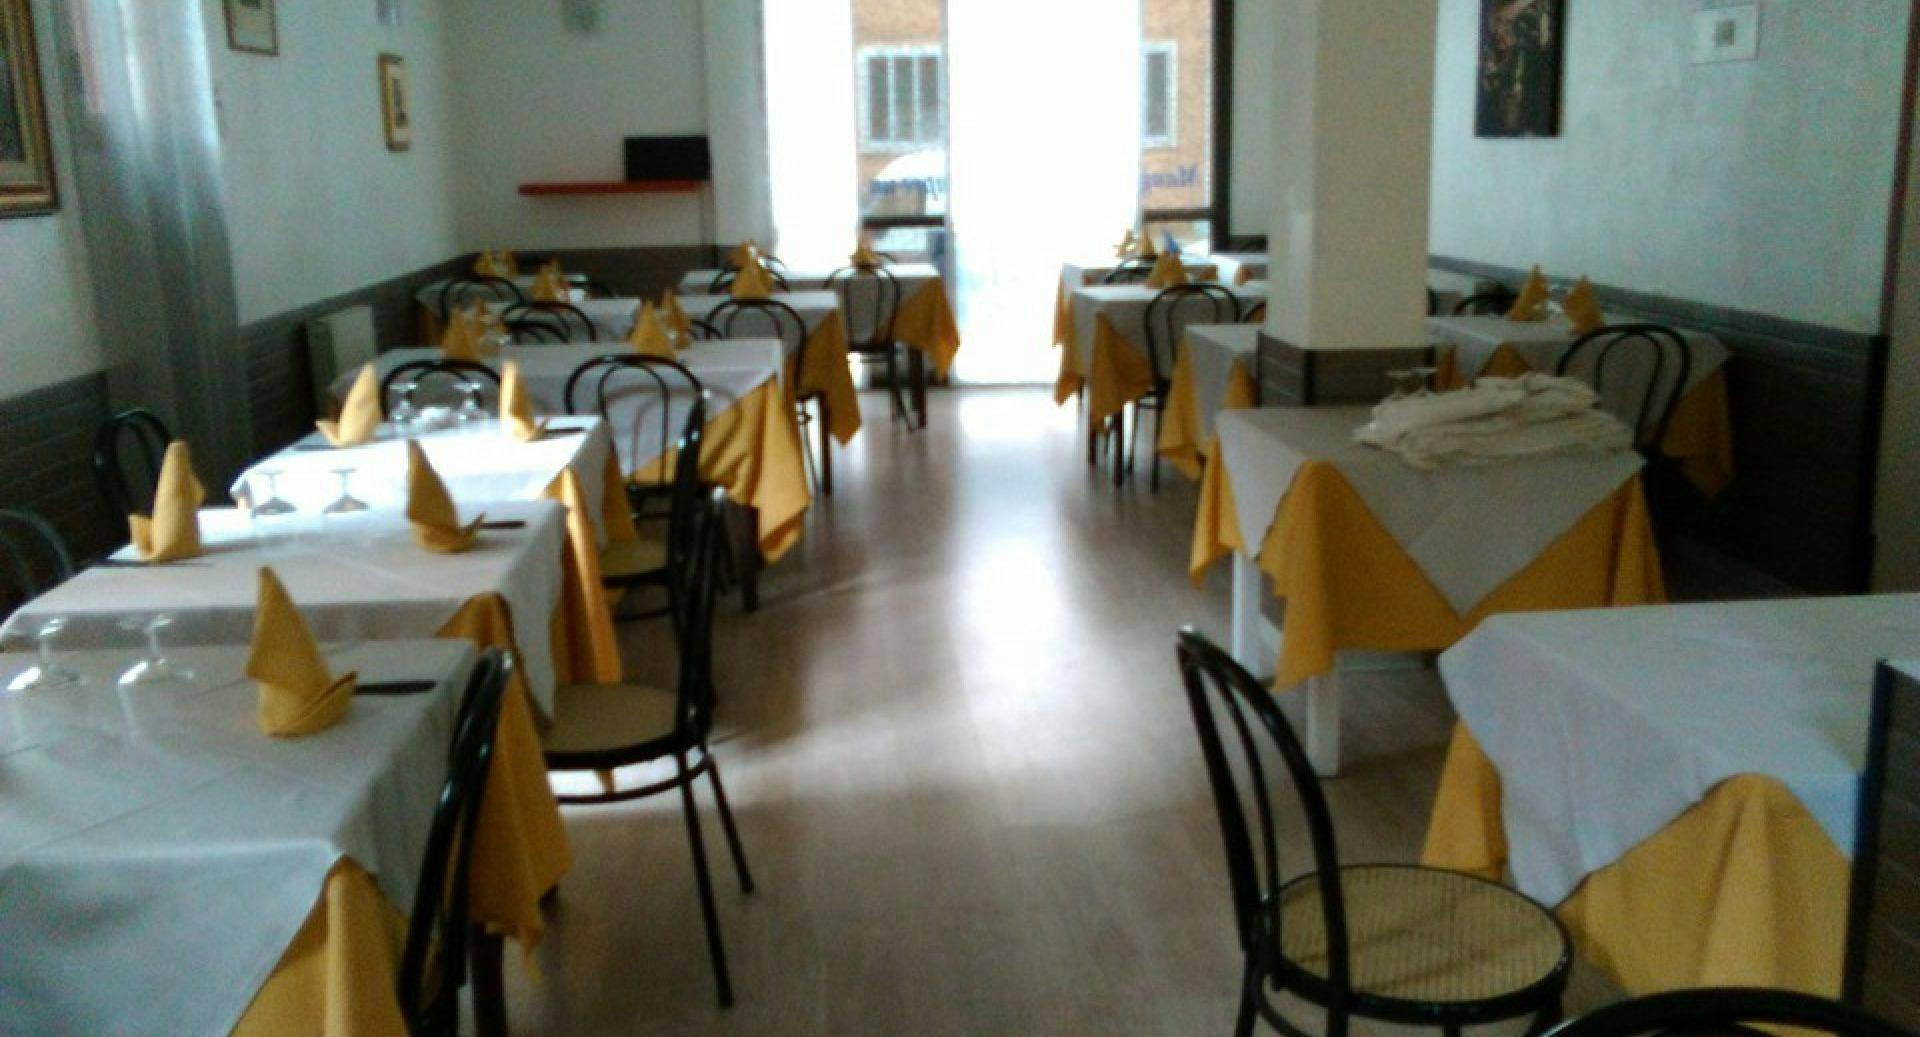 Photo of restaurant La Vela Ristorante Pizzeria in Navile, Bologna